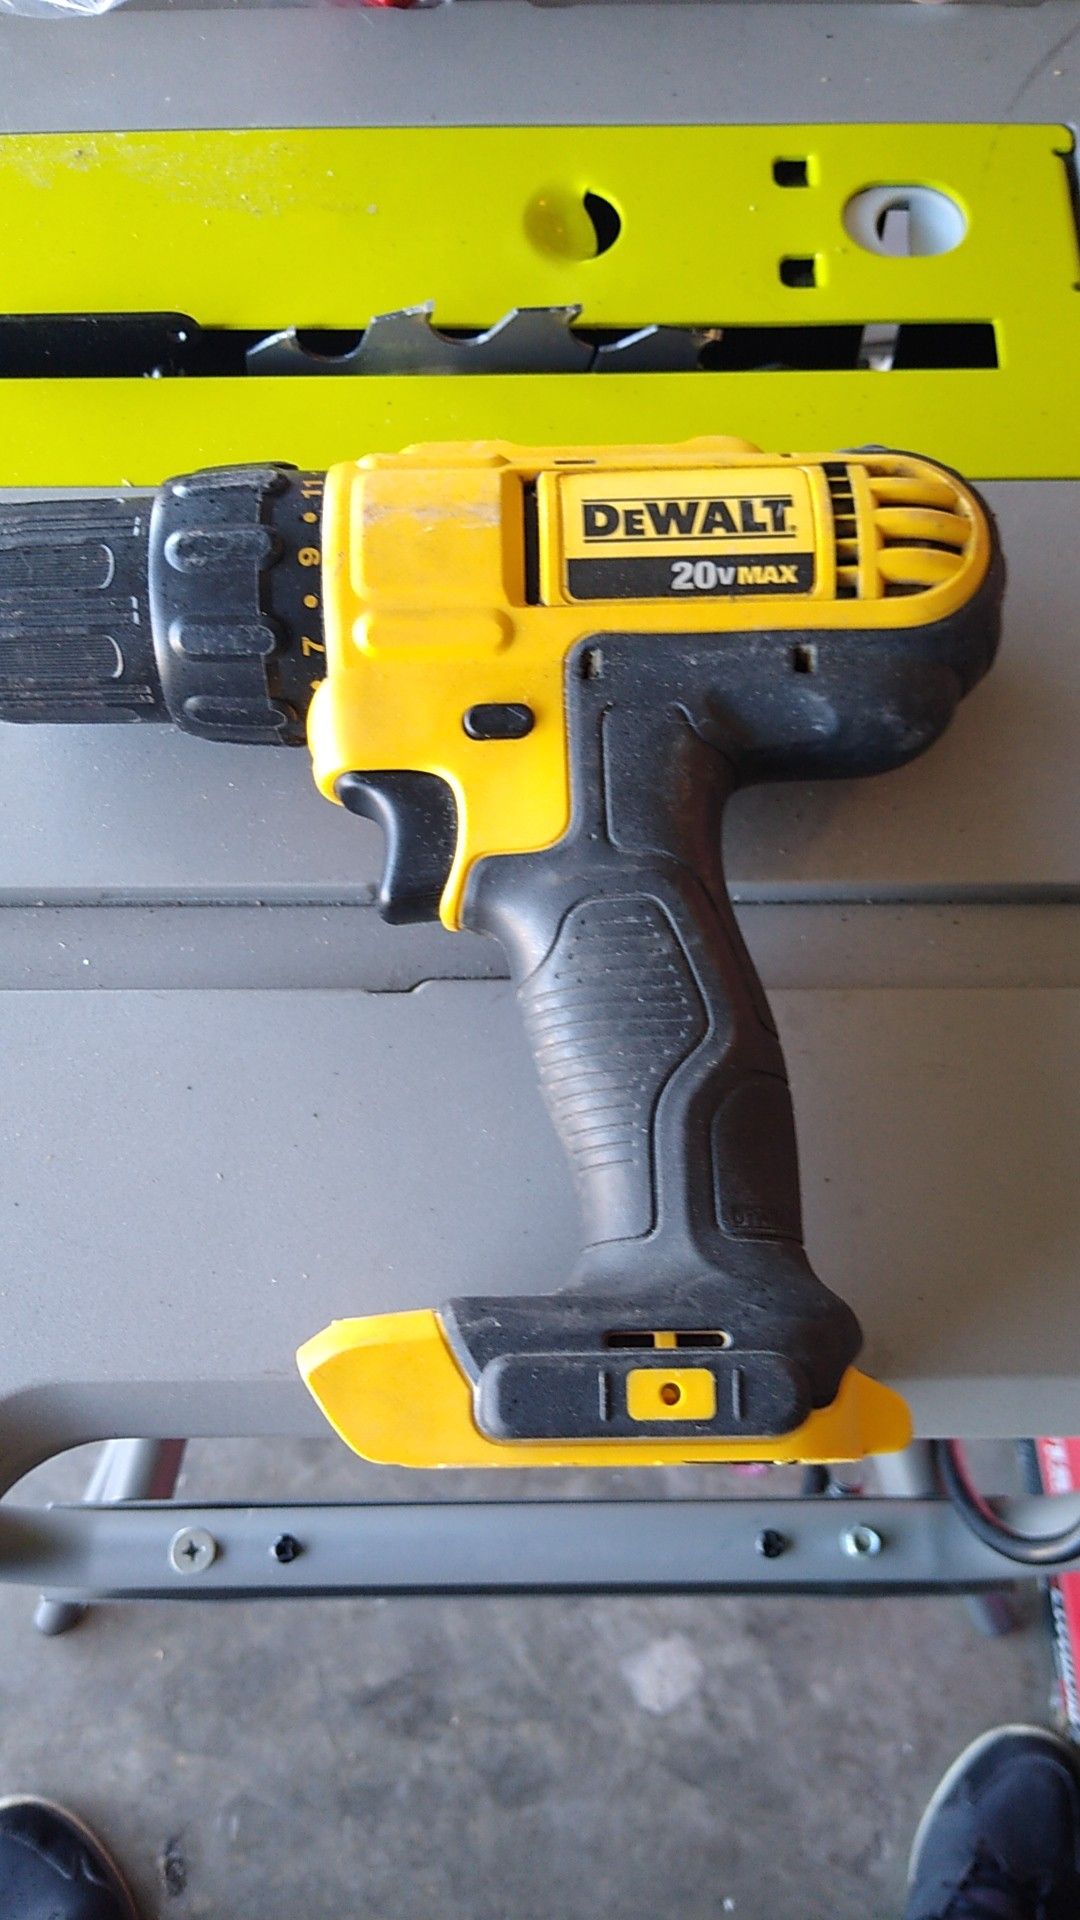 Dewalt 20v drill ( tool only)